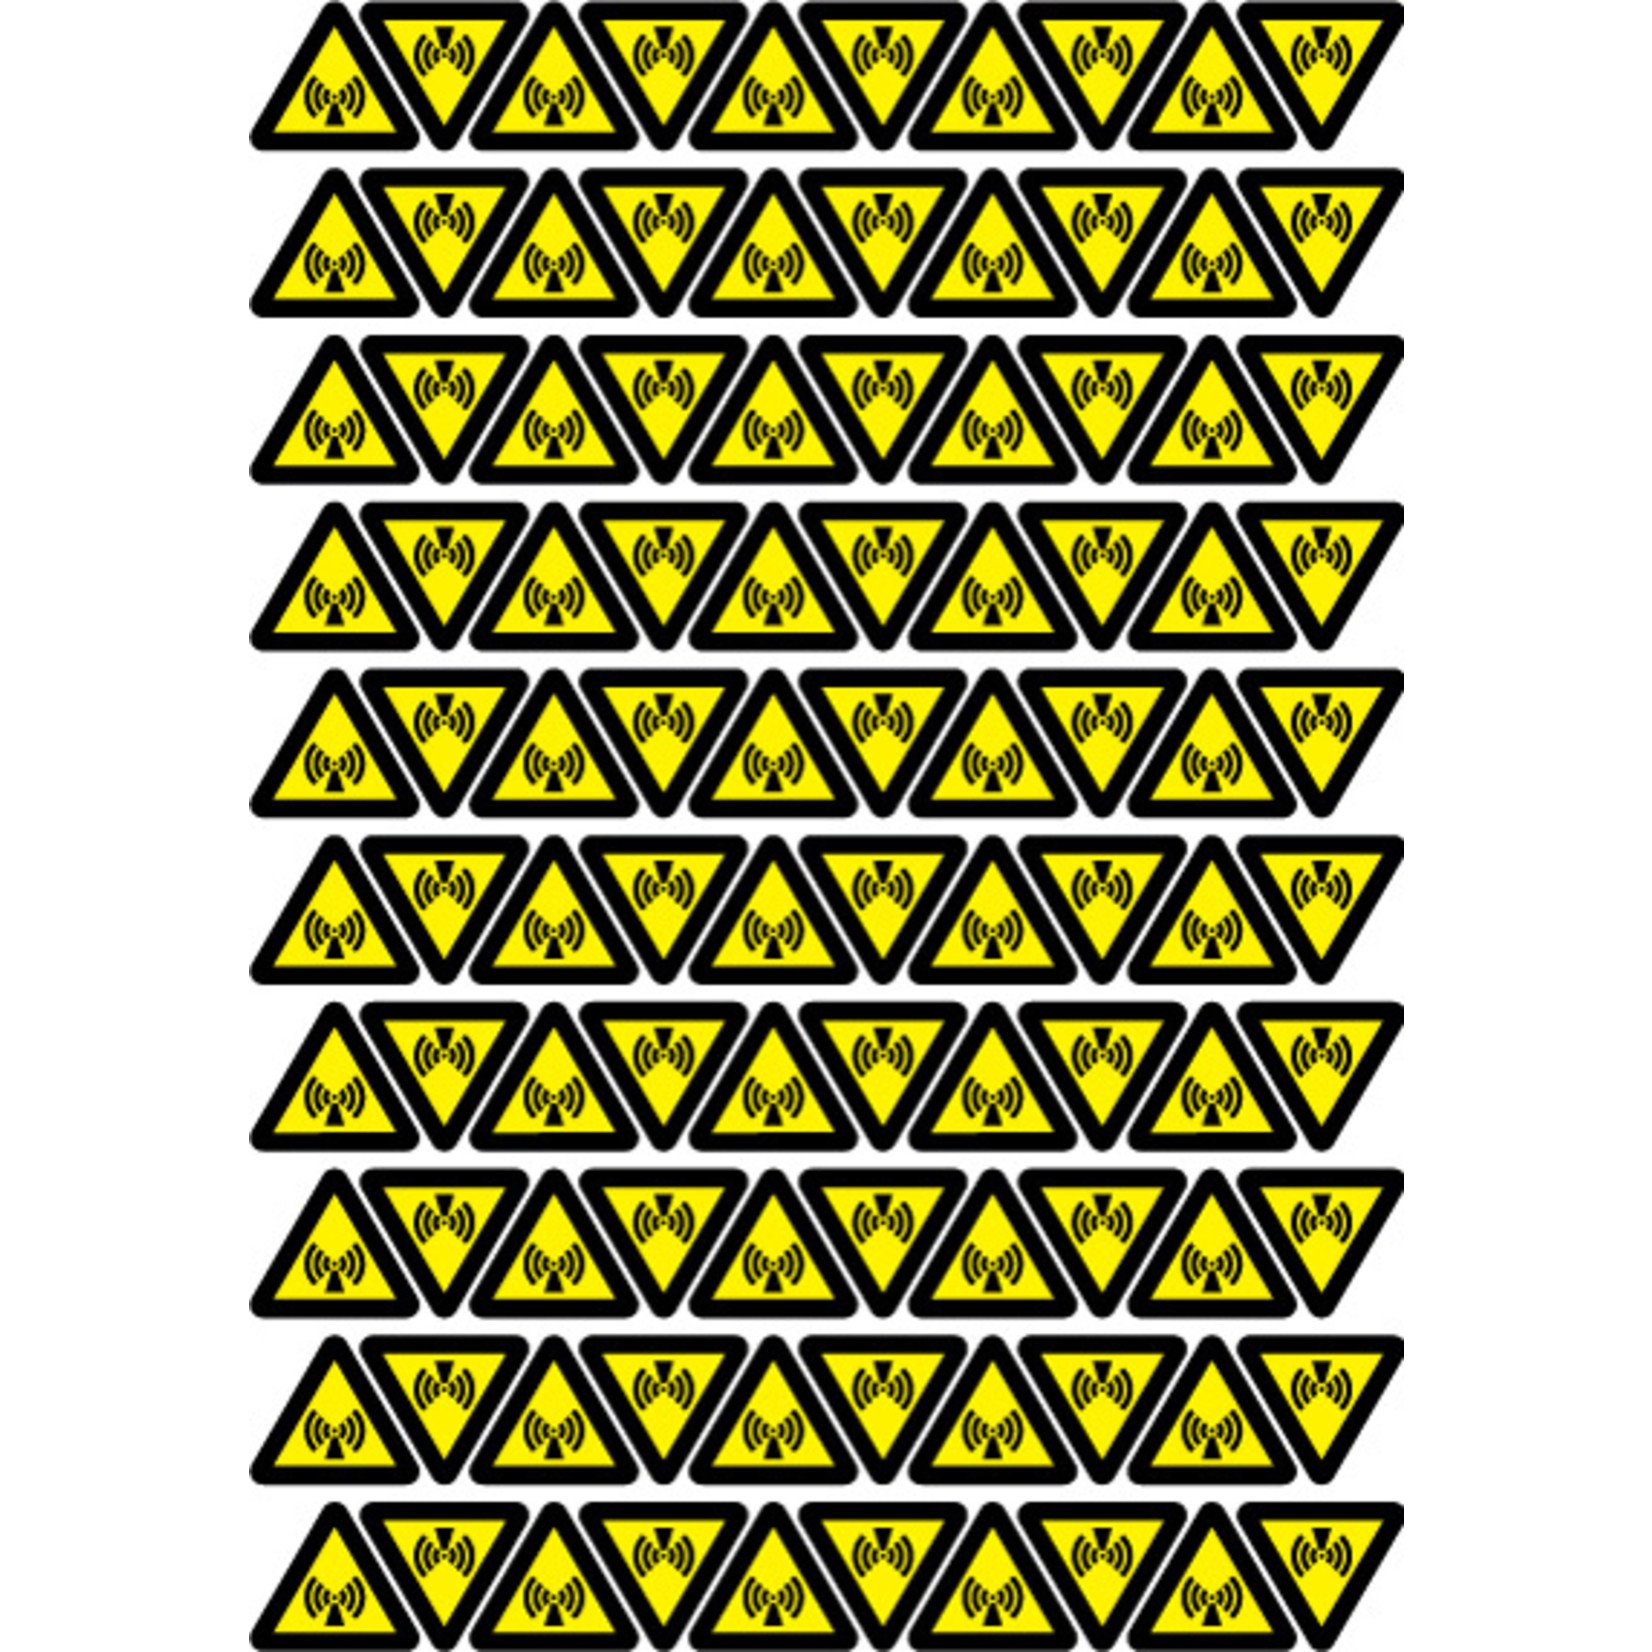 pictogram "Niet-ioniserende straling" sticker